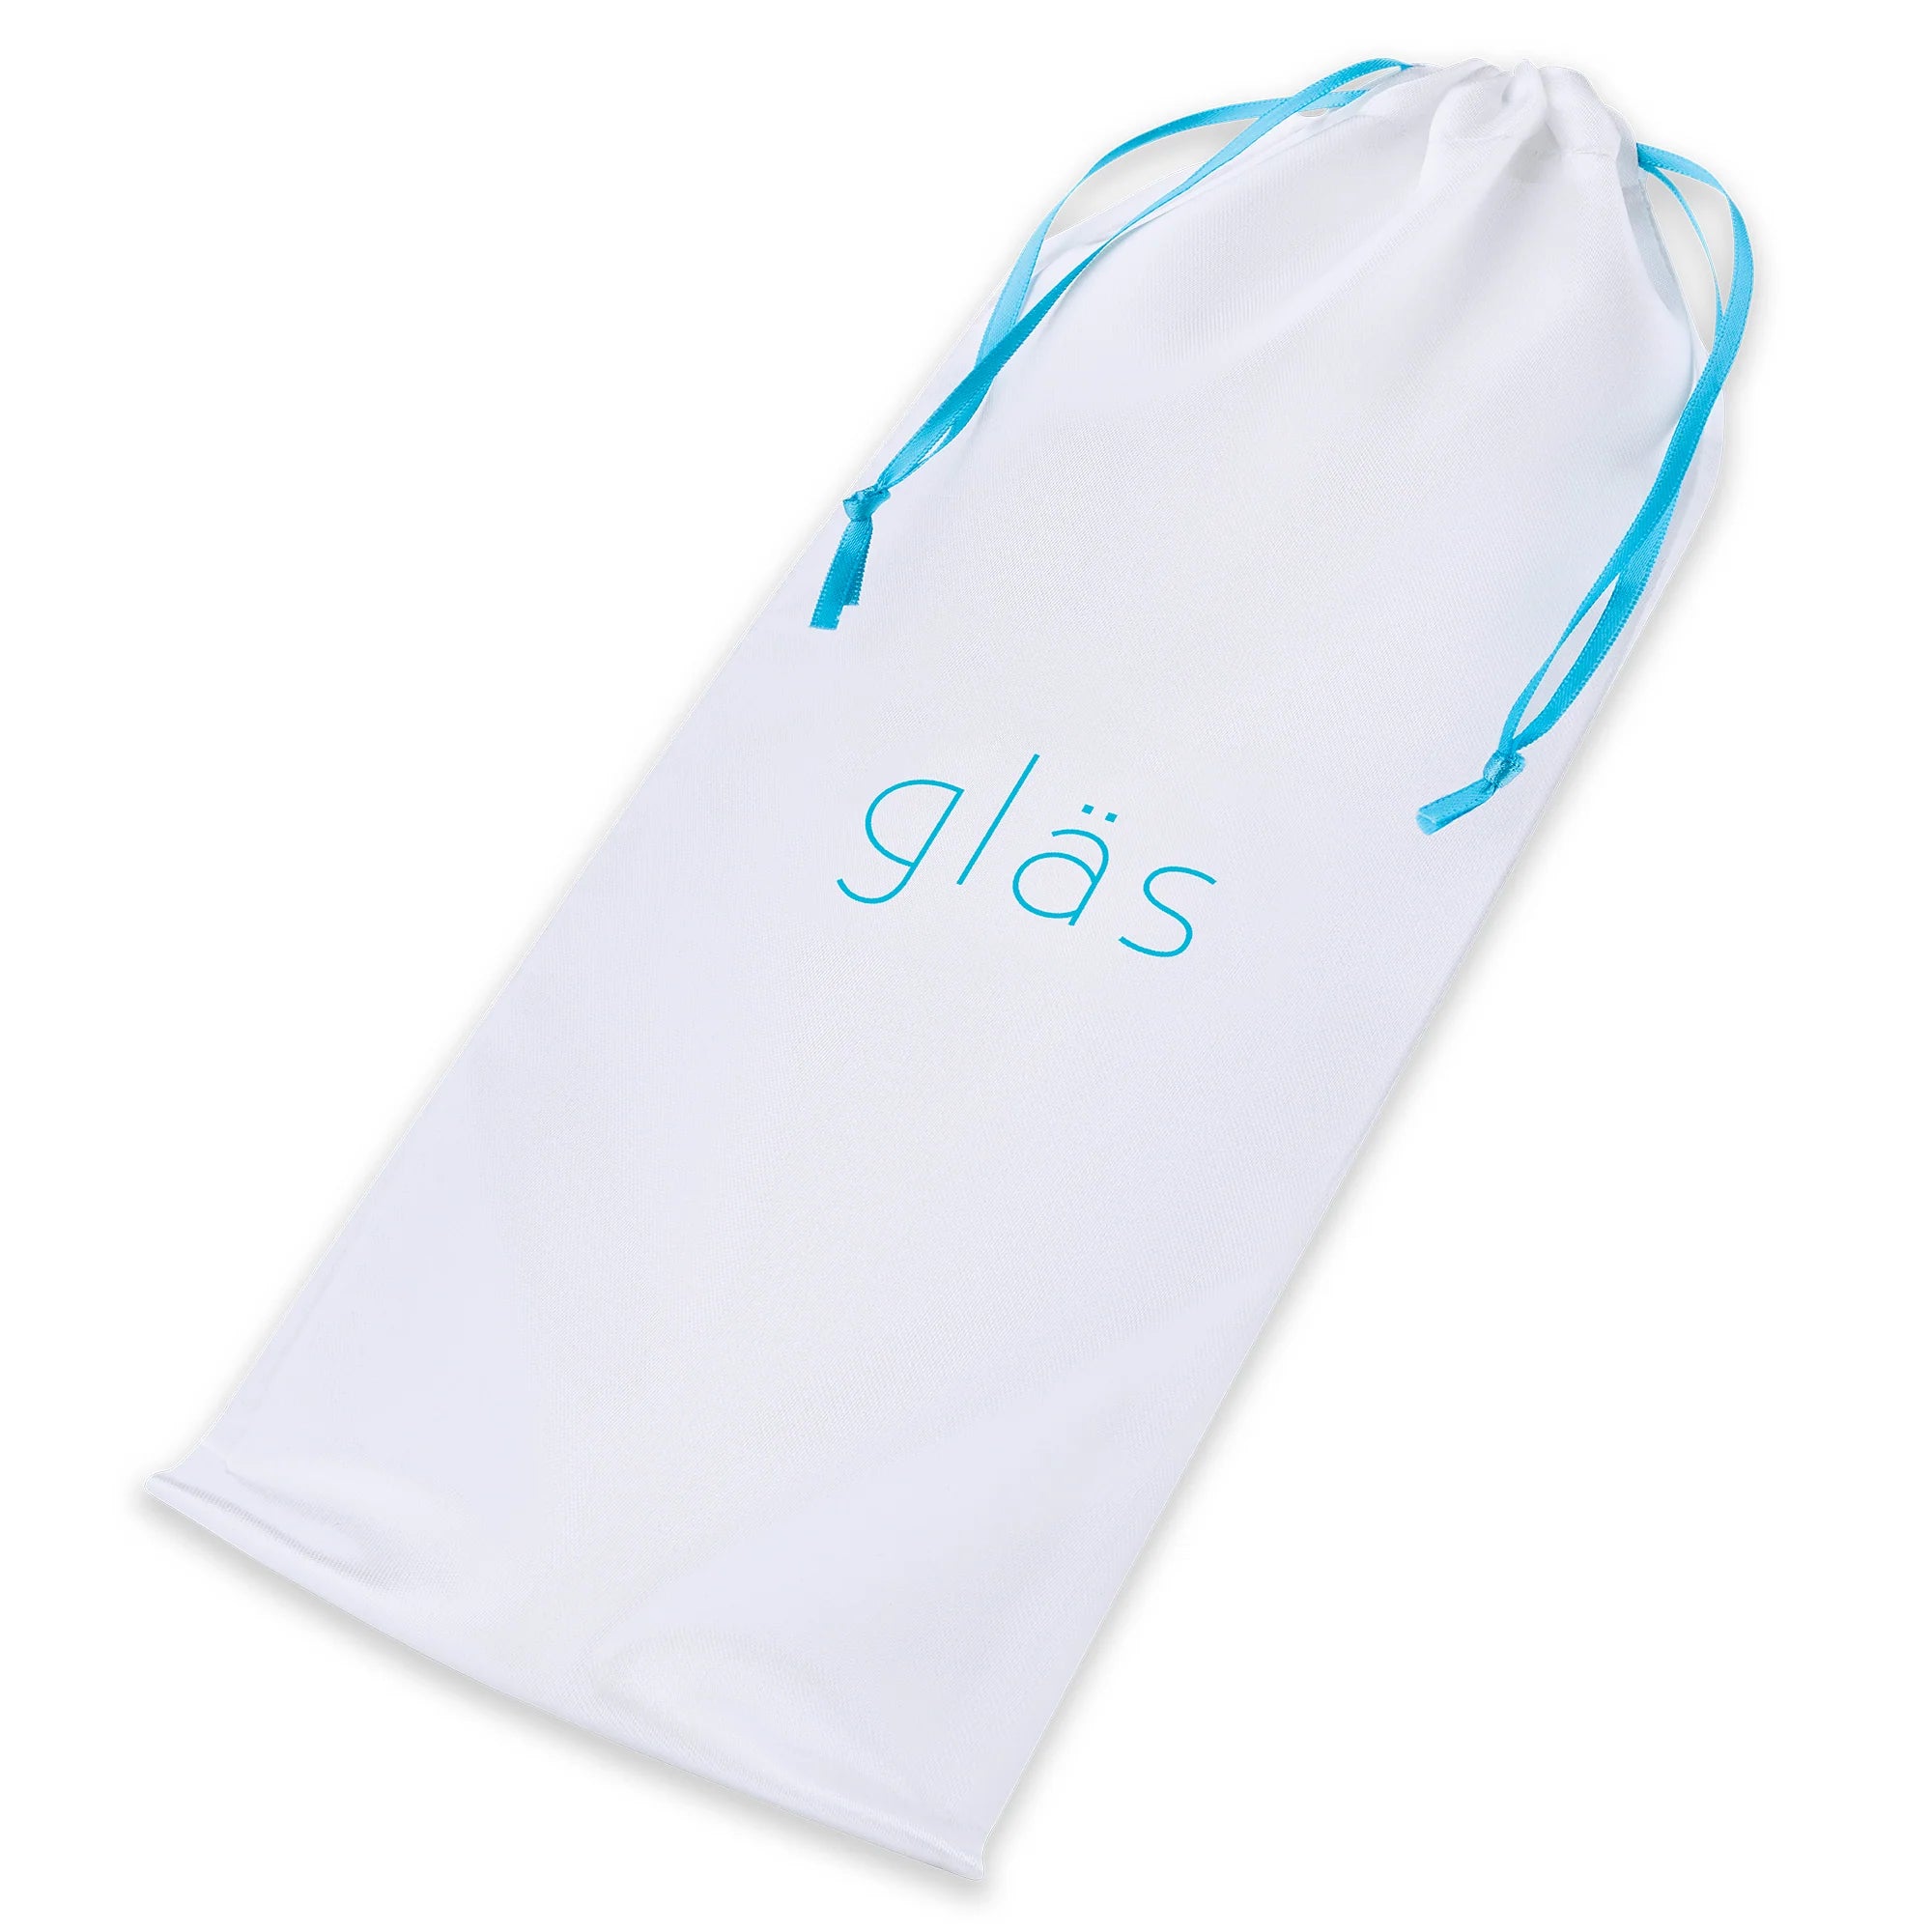 Gläs 12" Girthy Ribbed G-Spot Glass Dildo With Handle Grip Double Ended - Rolik®